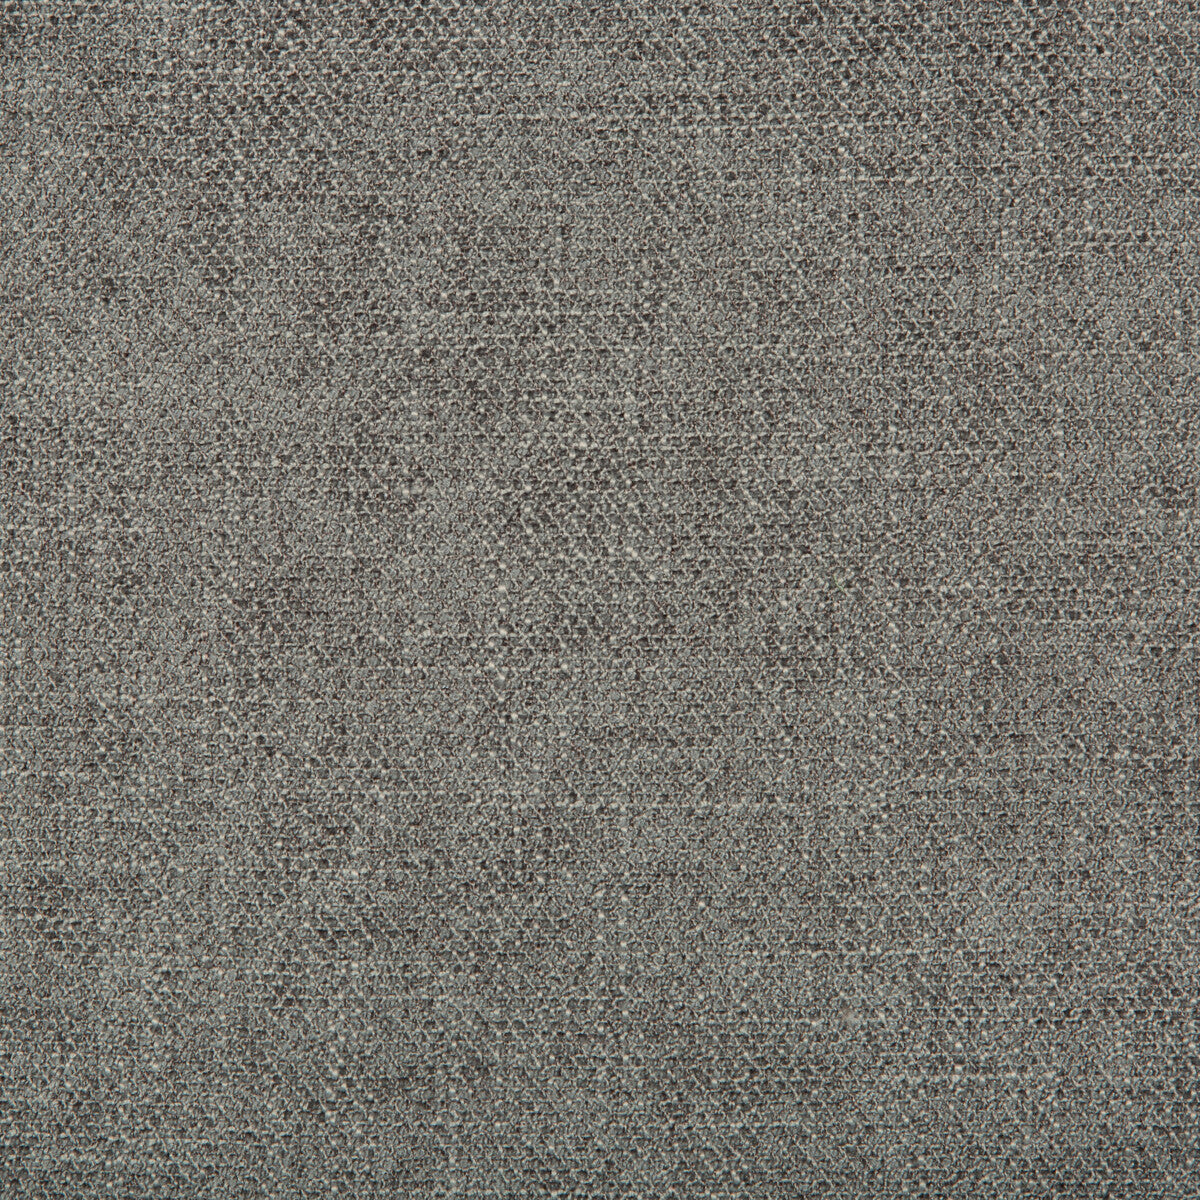 Kf Smt fabric - pattern 35060.2121.0 - by Kravet Smart in the Performance Kravetarmor collection